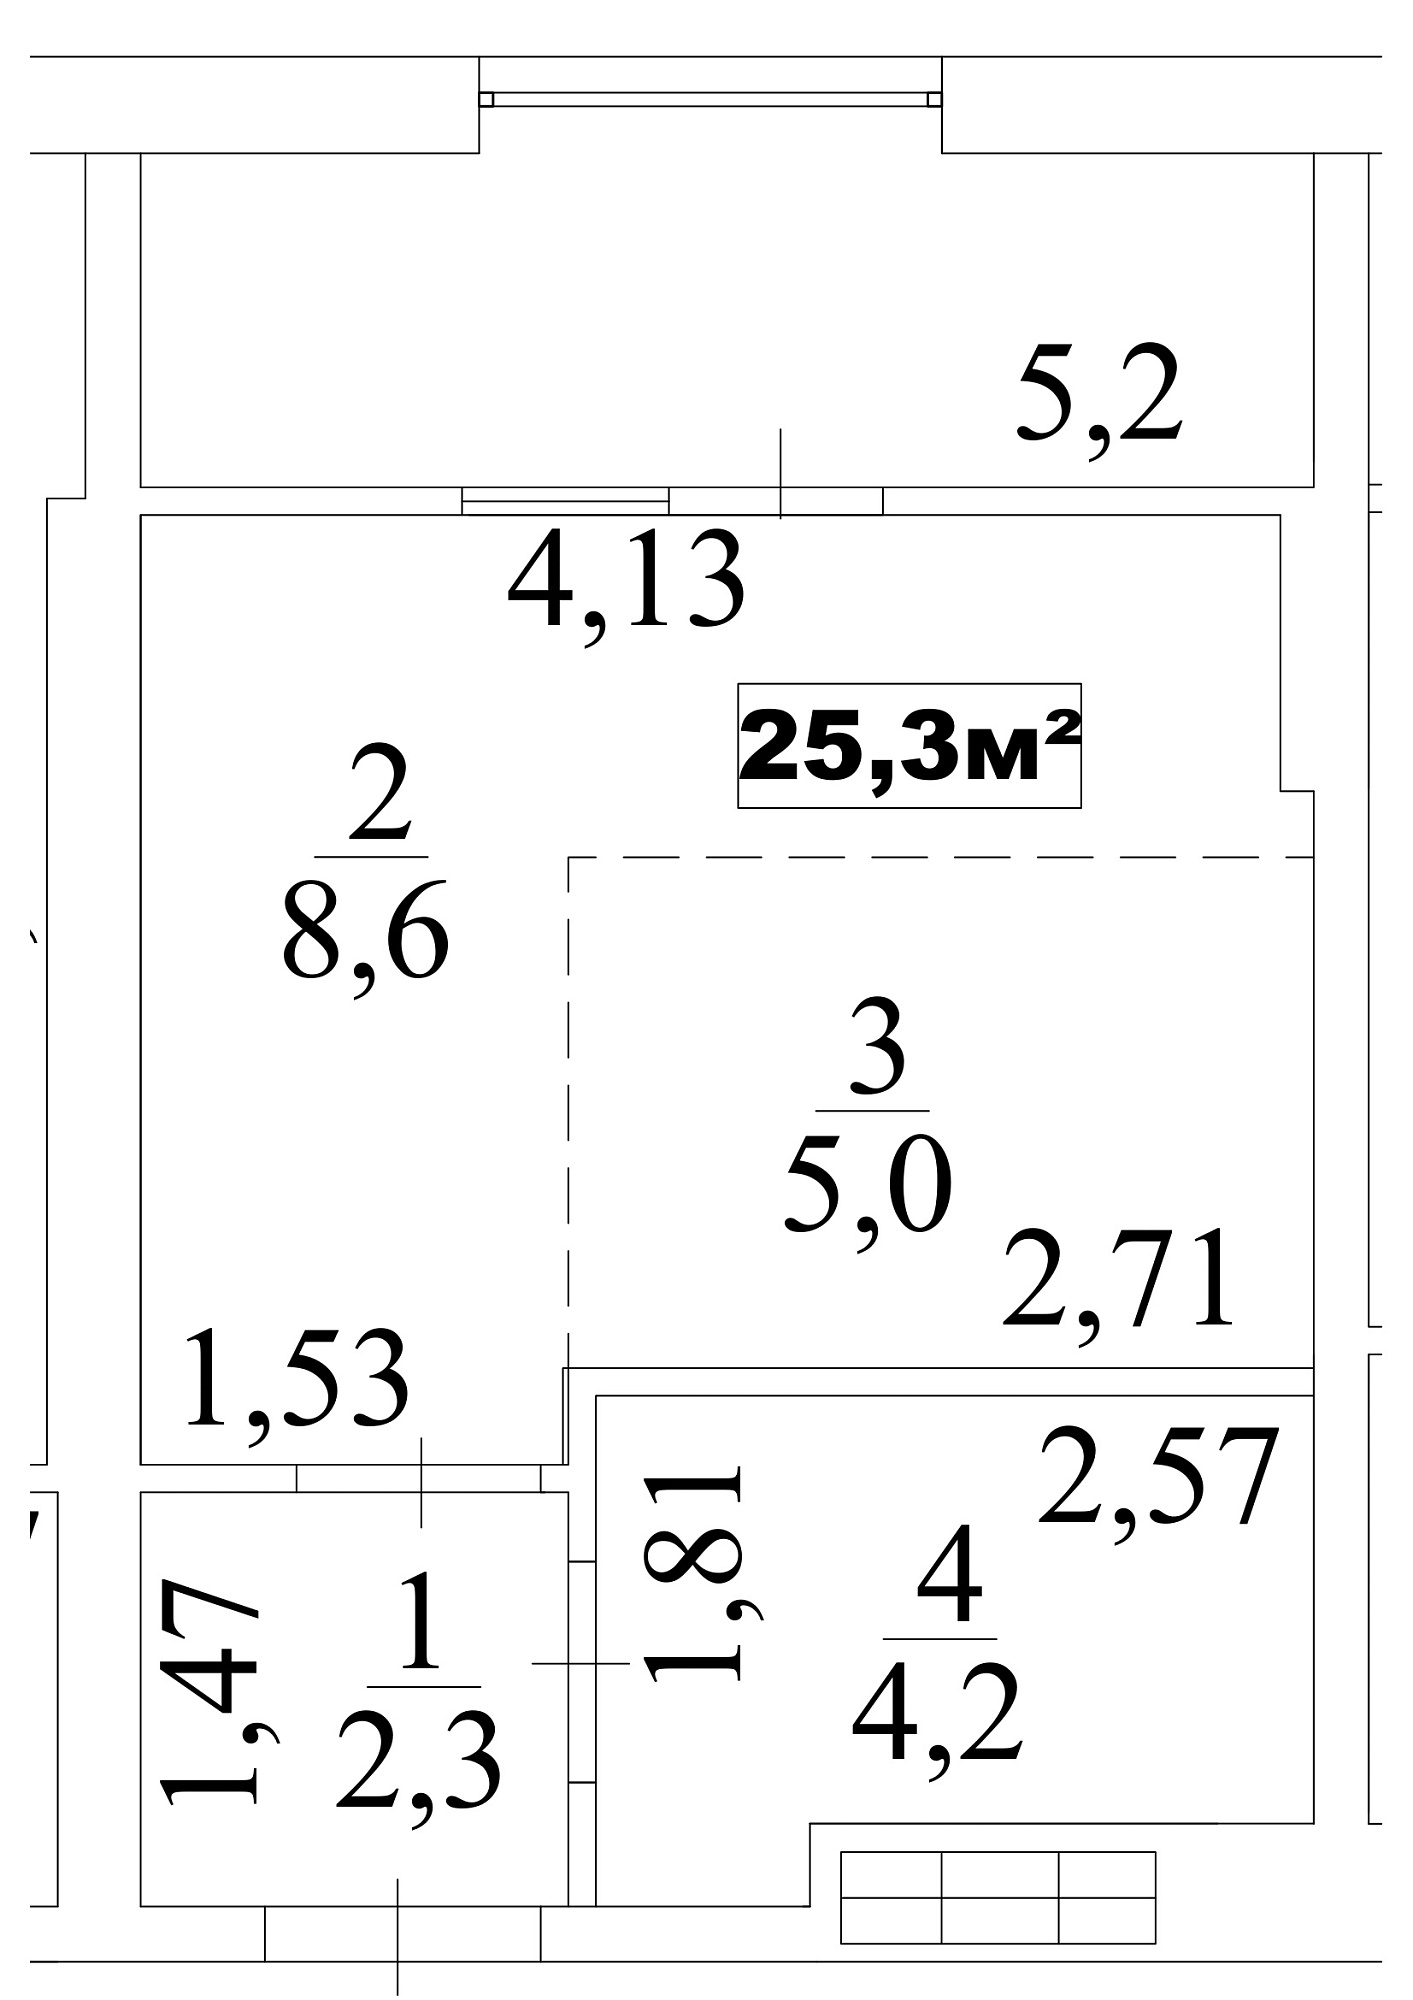 Планировка Smart-квартира площей 25.3м2, AB-10-03/0021в.